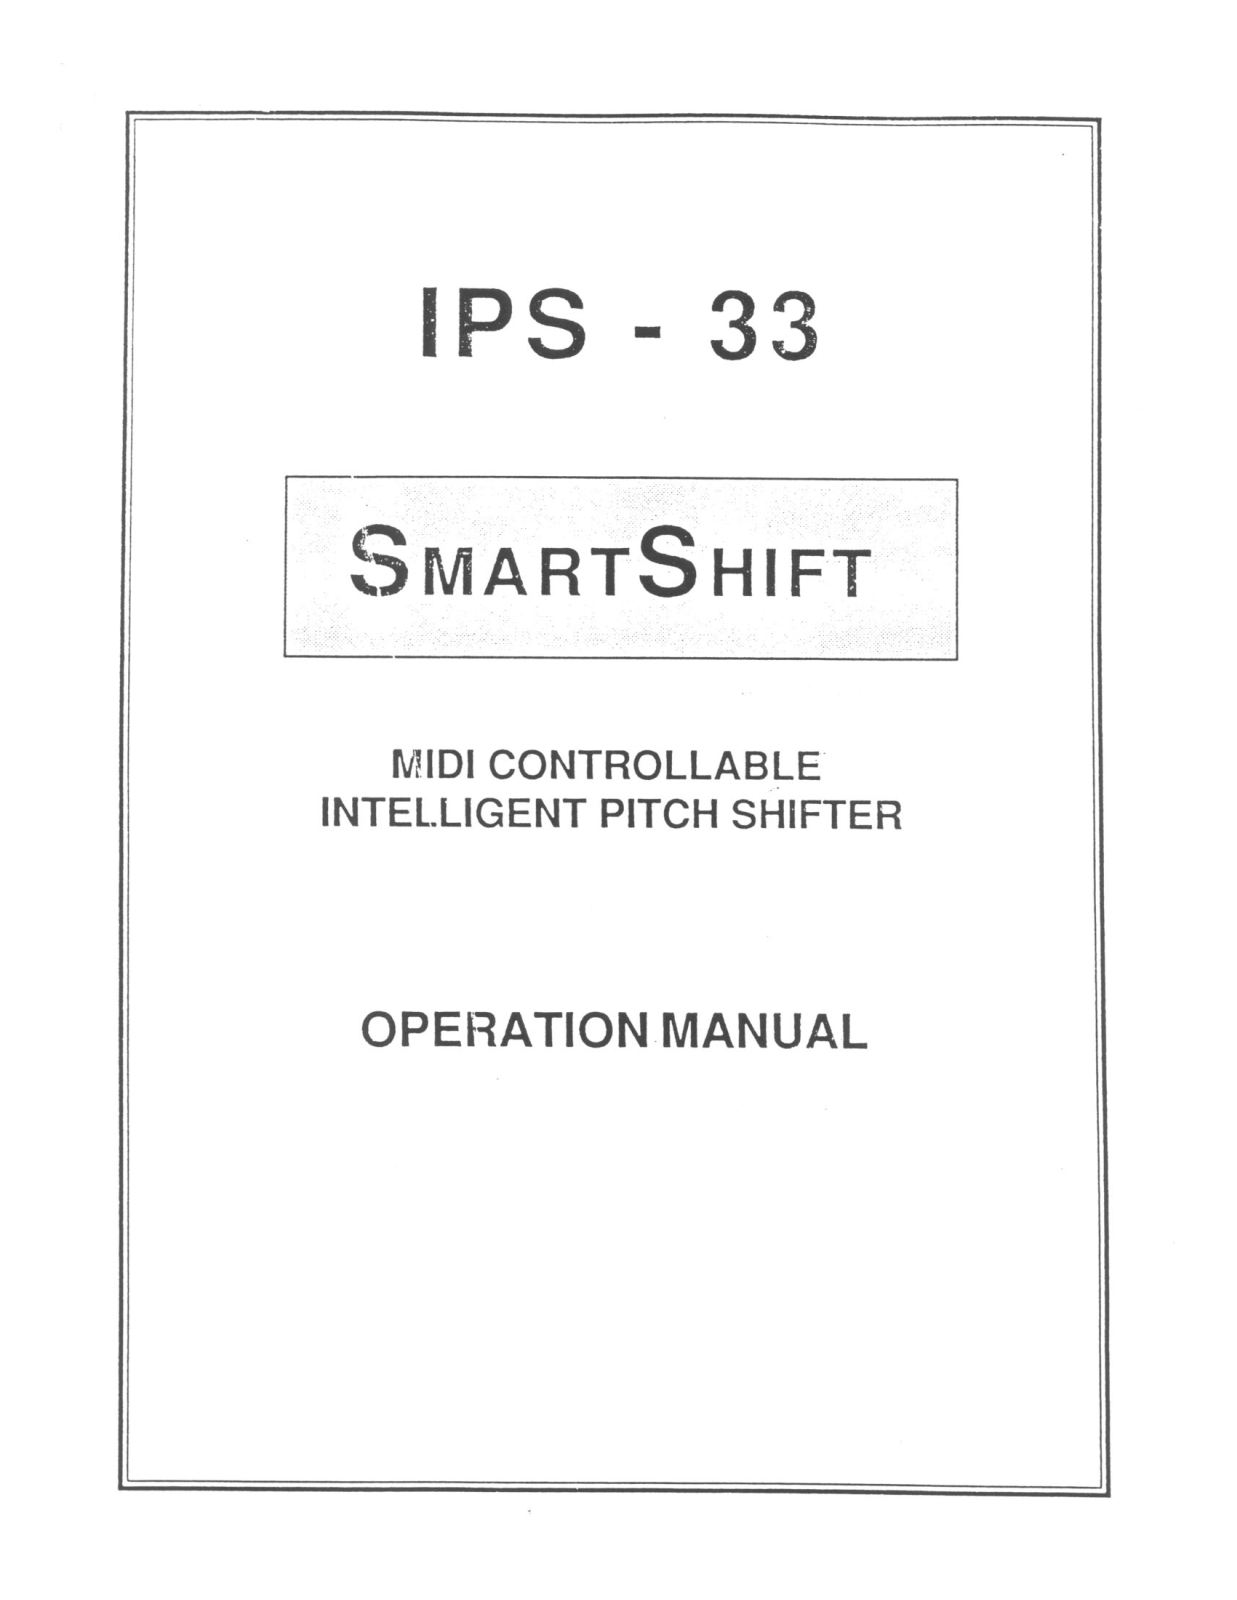 DigiTech IPS33 User Manual